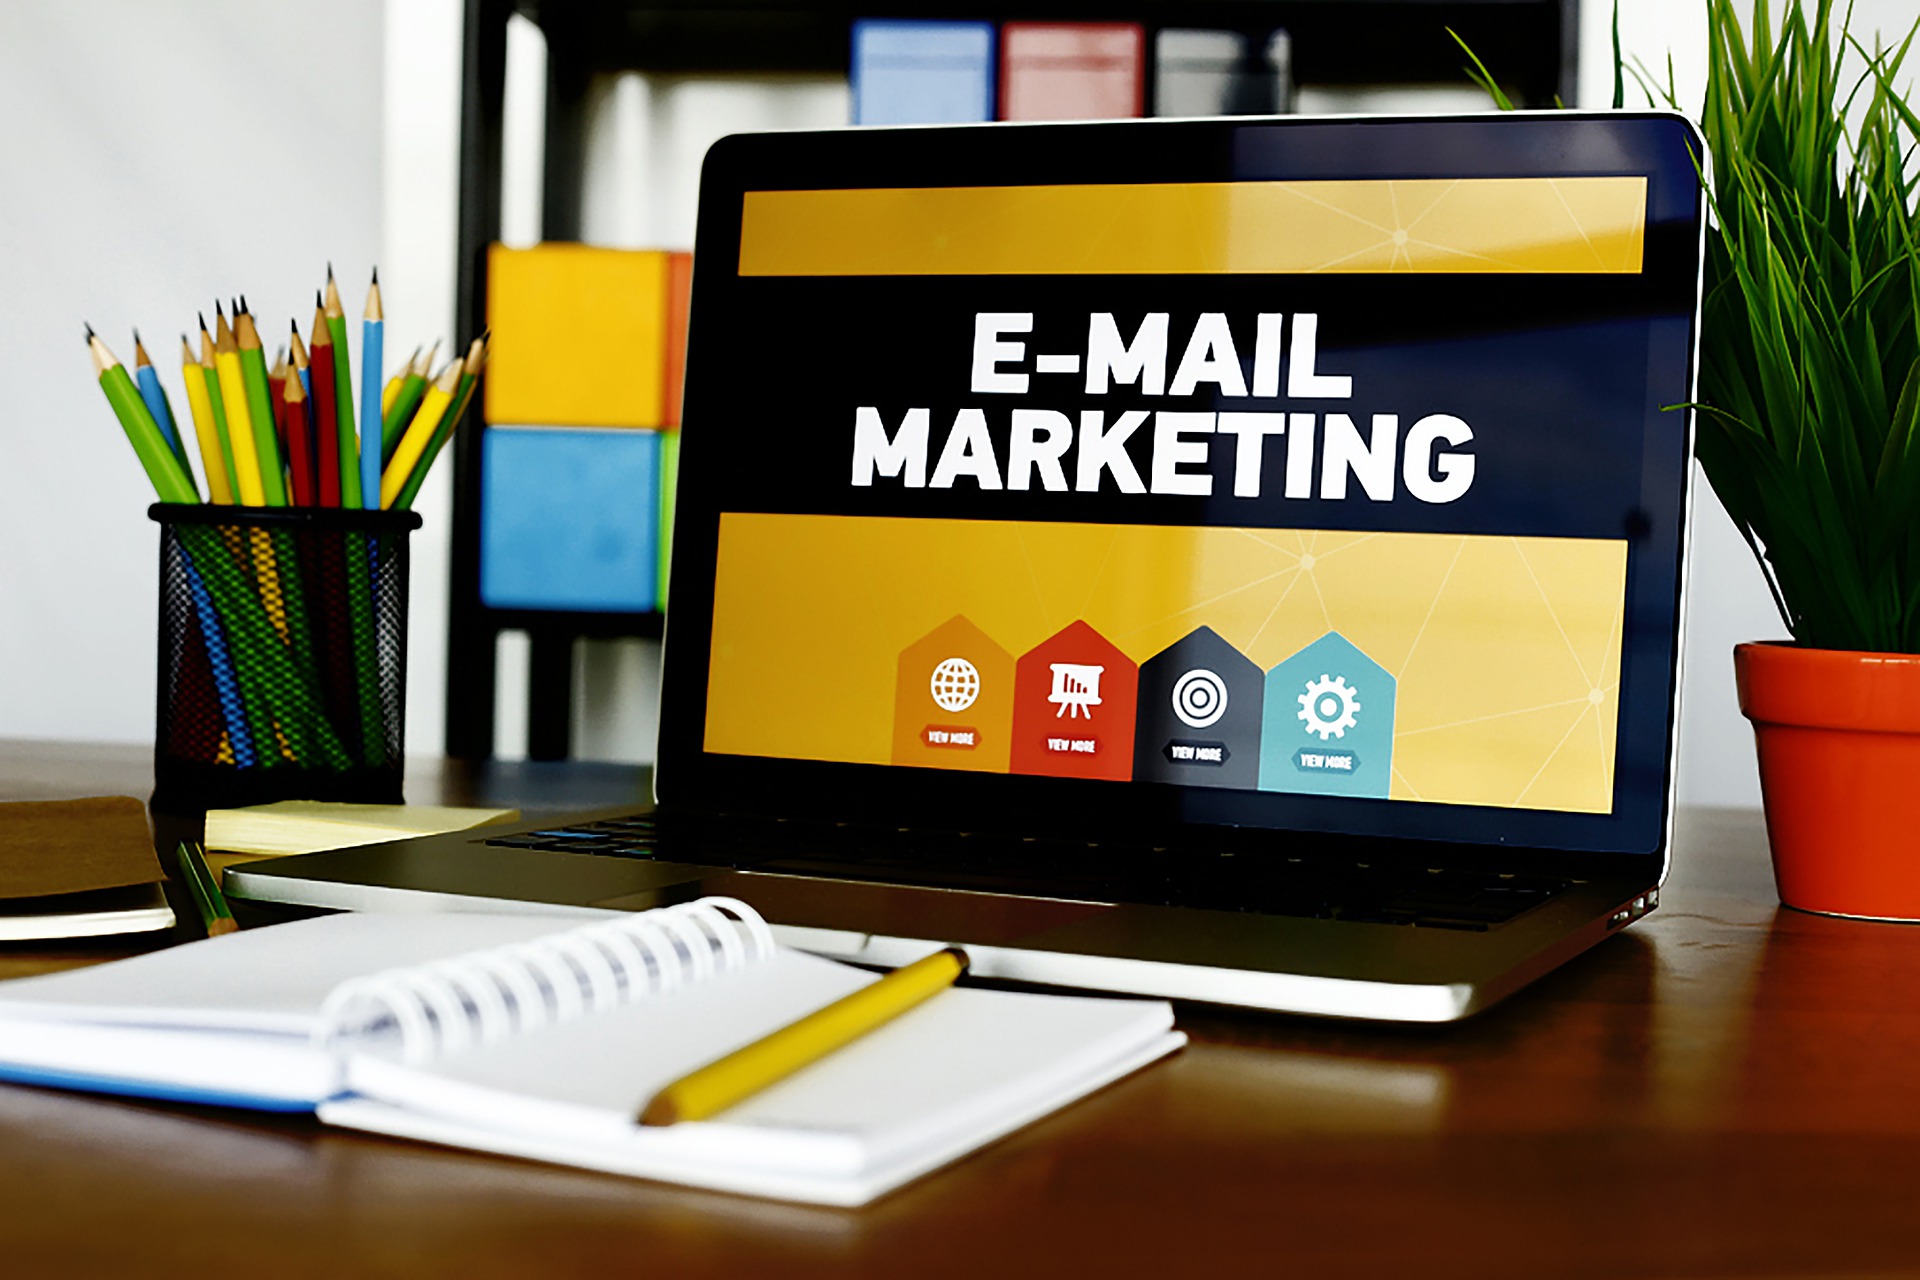 truyen-thong-online-qua-e-mail-marketing